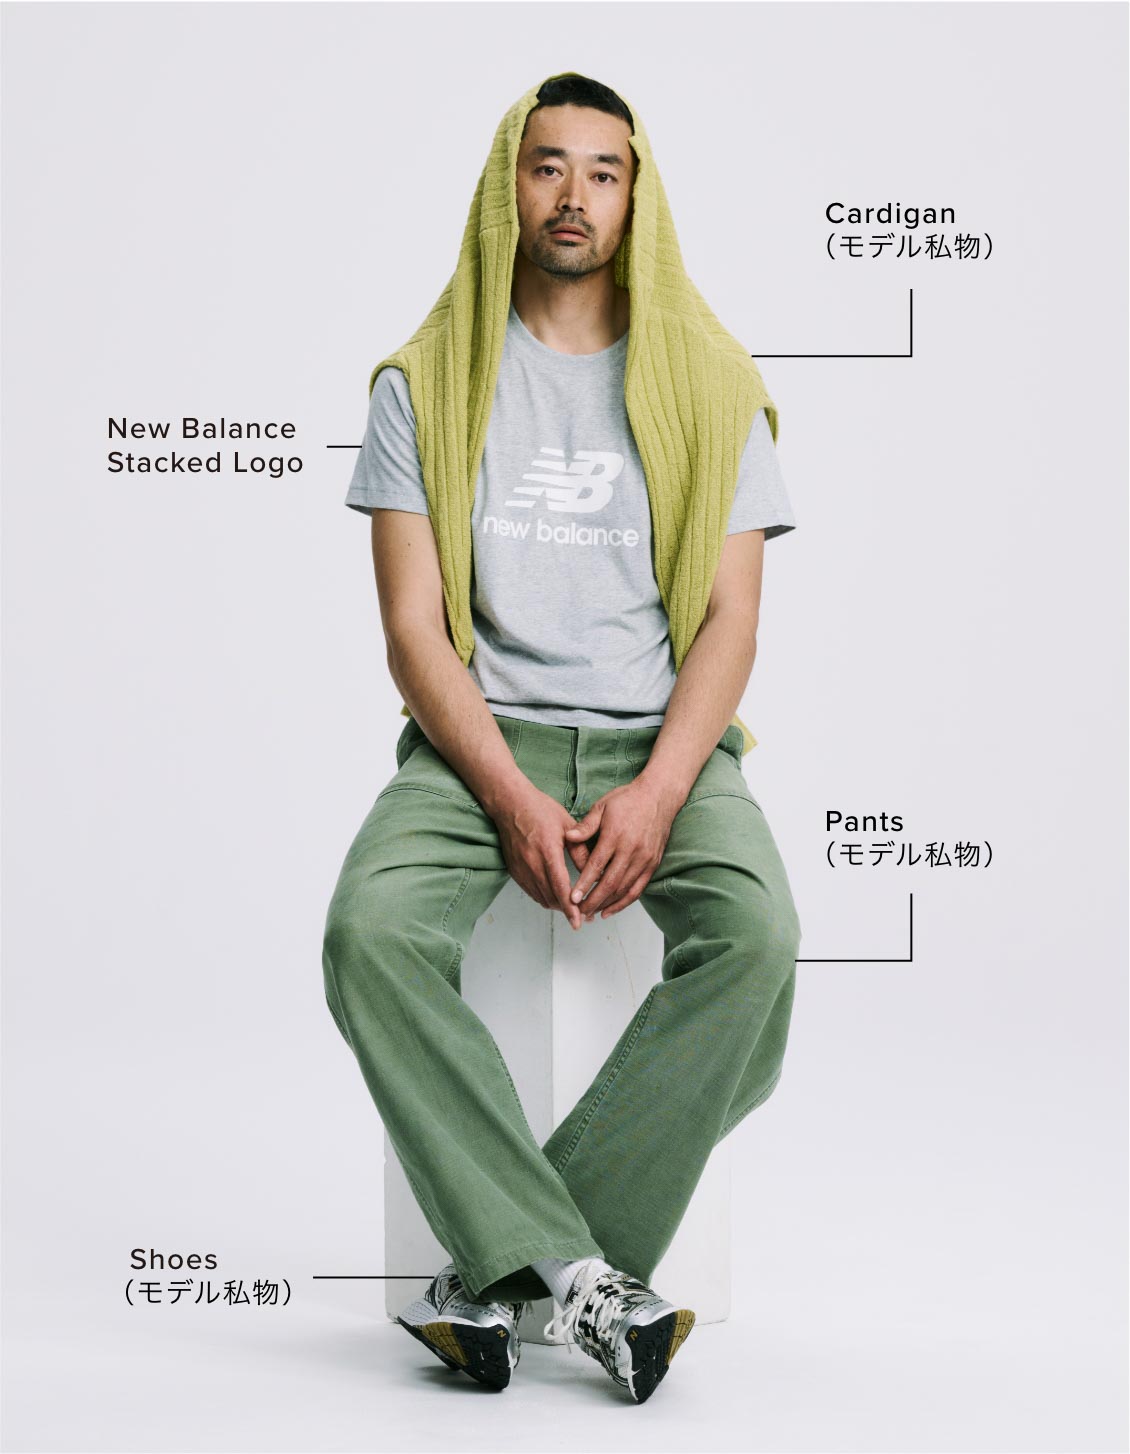 Yoichi Owashi 코디네이터 상세 T셔츠:New Balance Stacked Logo, Cardigan:모델 사물, Pants:모델 사물, Shoes:모델 사물